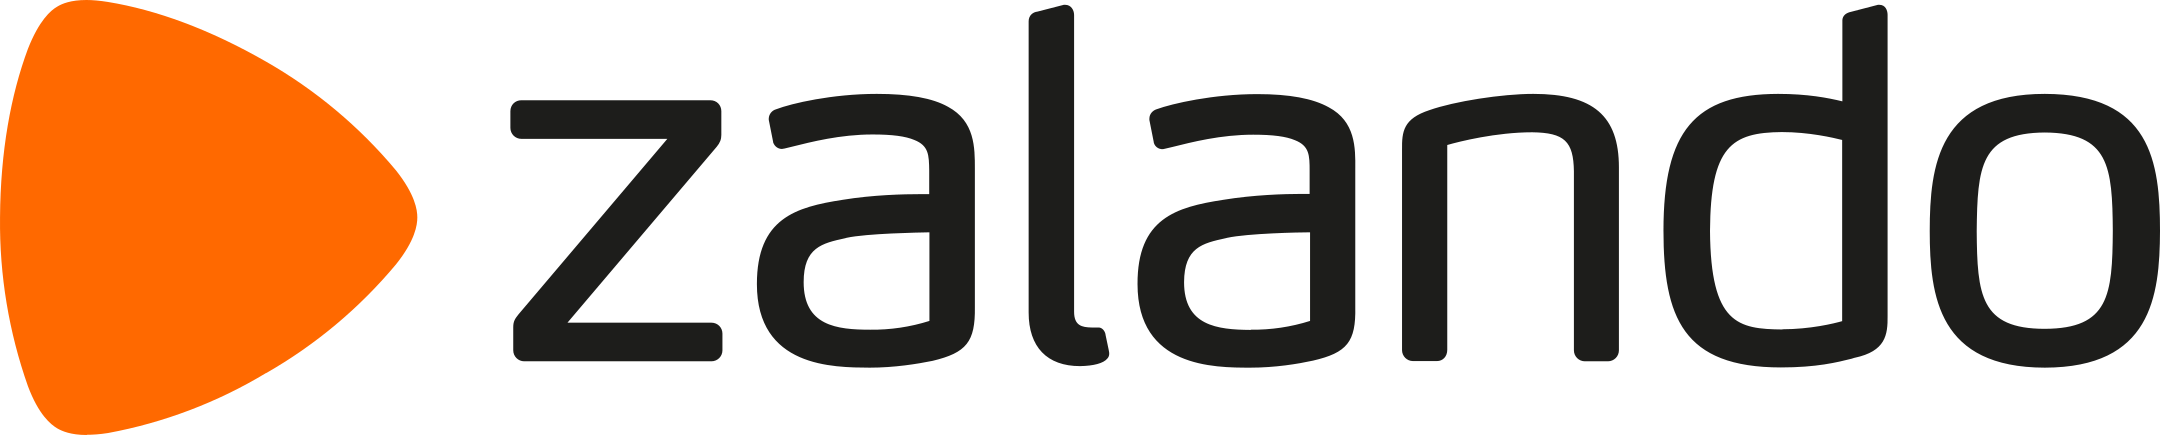 Zalando Logo.